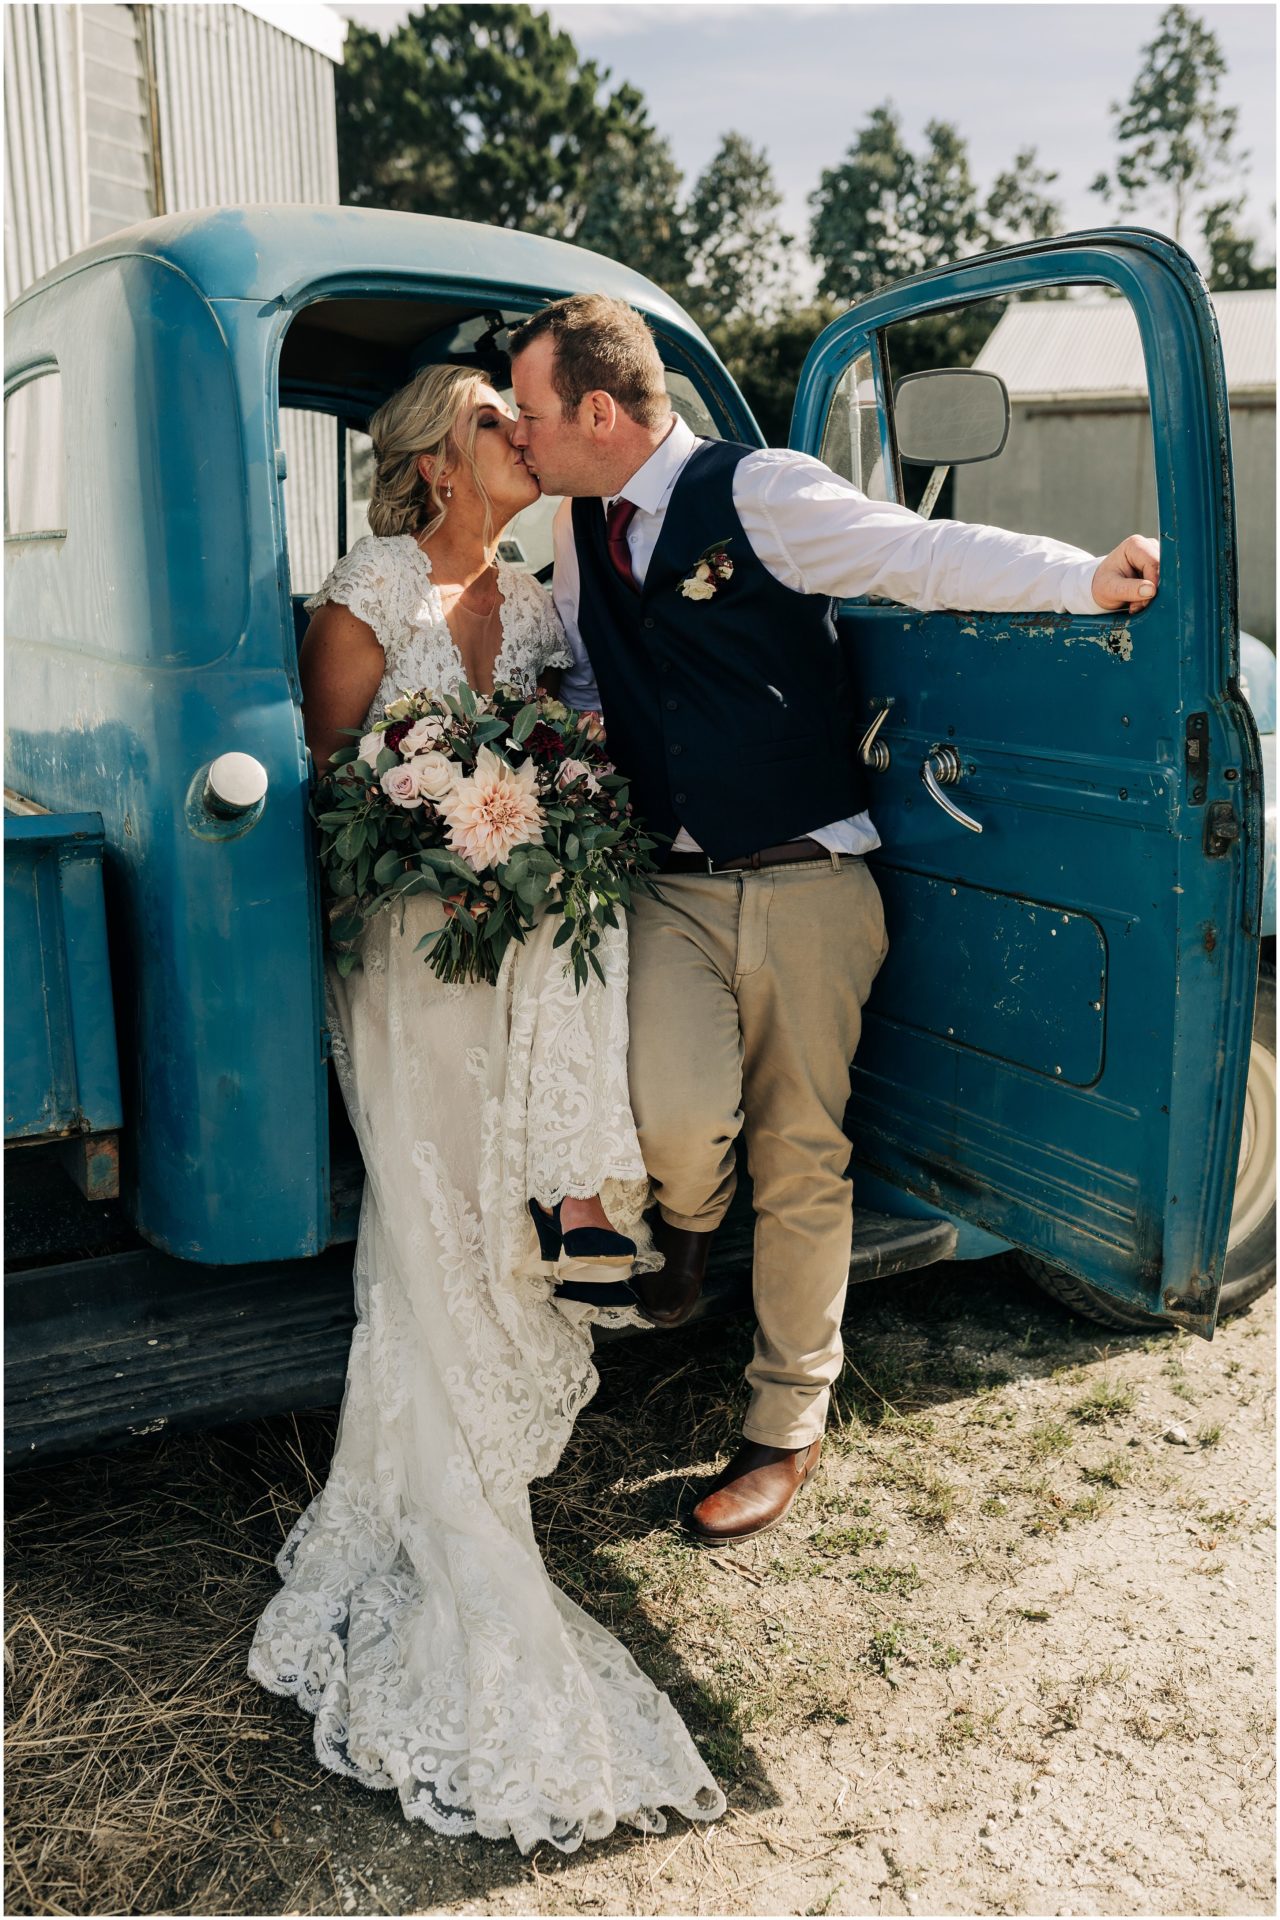 Wedding-photographer-christchurch-ford-old-truck-blue